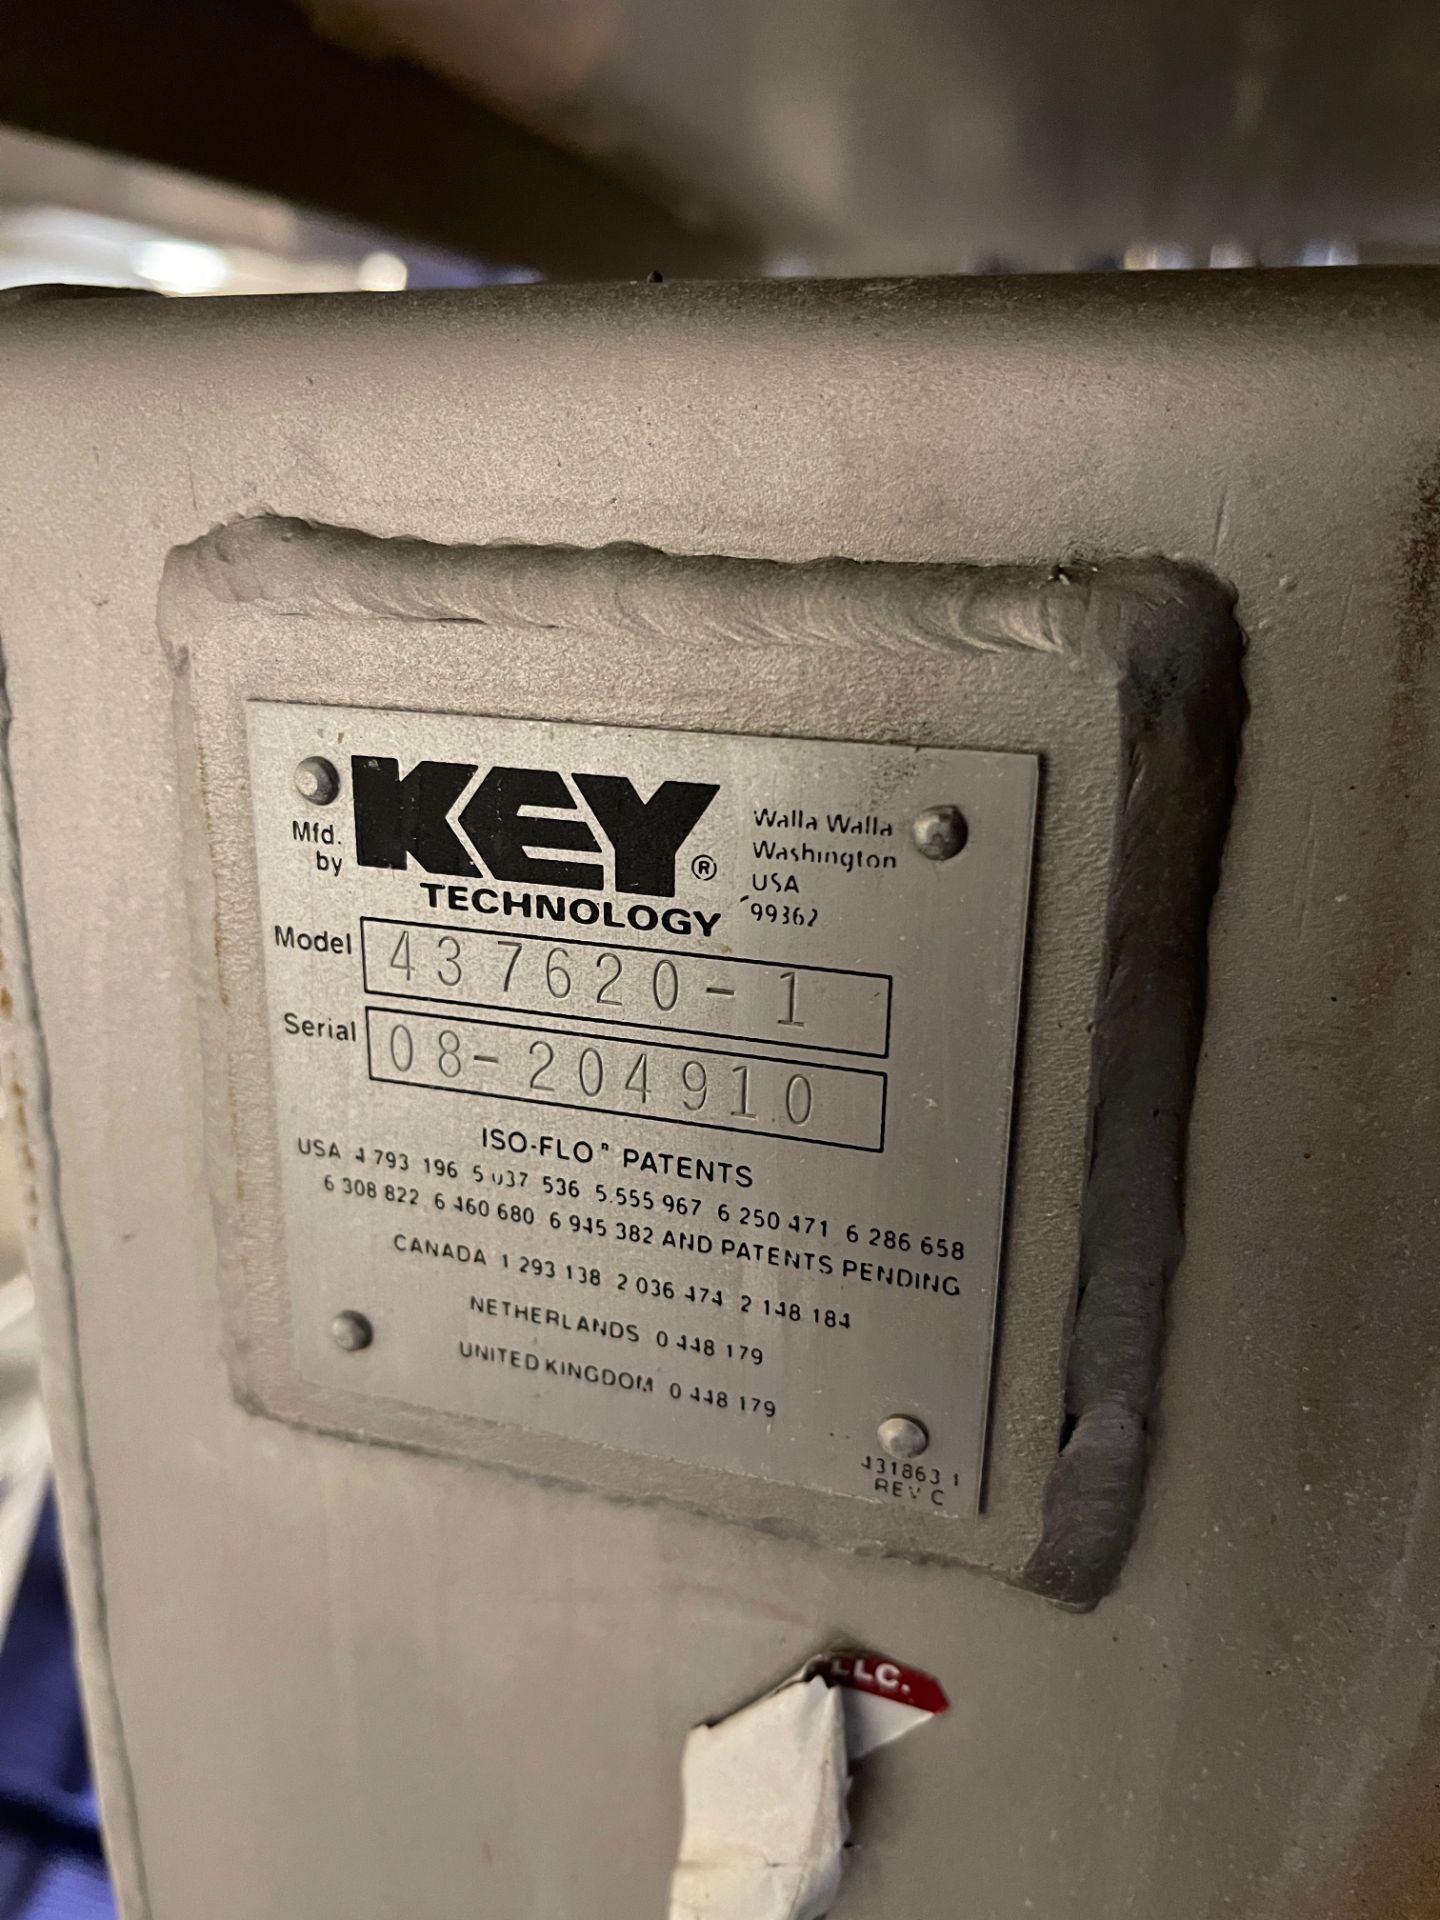 Key Isoflow Vibratory Conveyor, Approx. 24" x 12', Model 437620-1, S/N 08-204910 | Rig Fee $1500 - Image 4 of 6